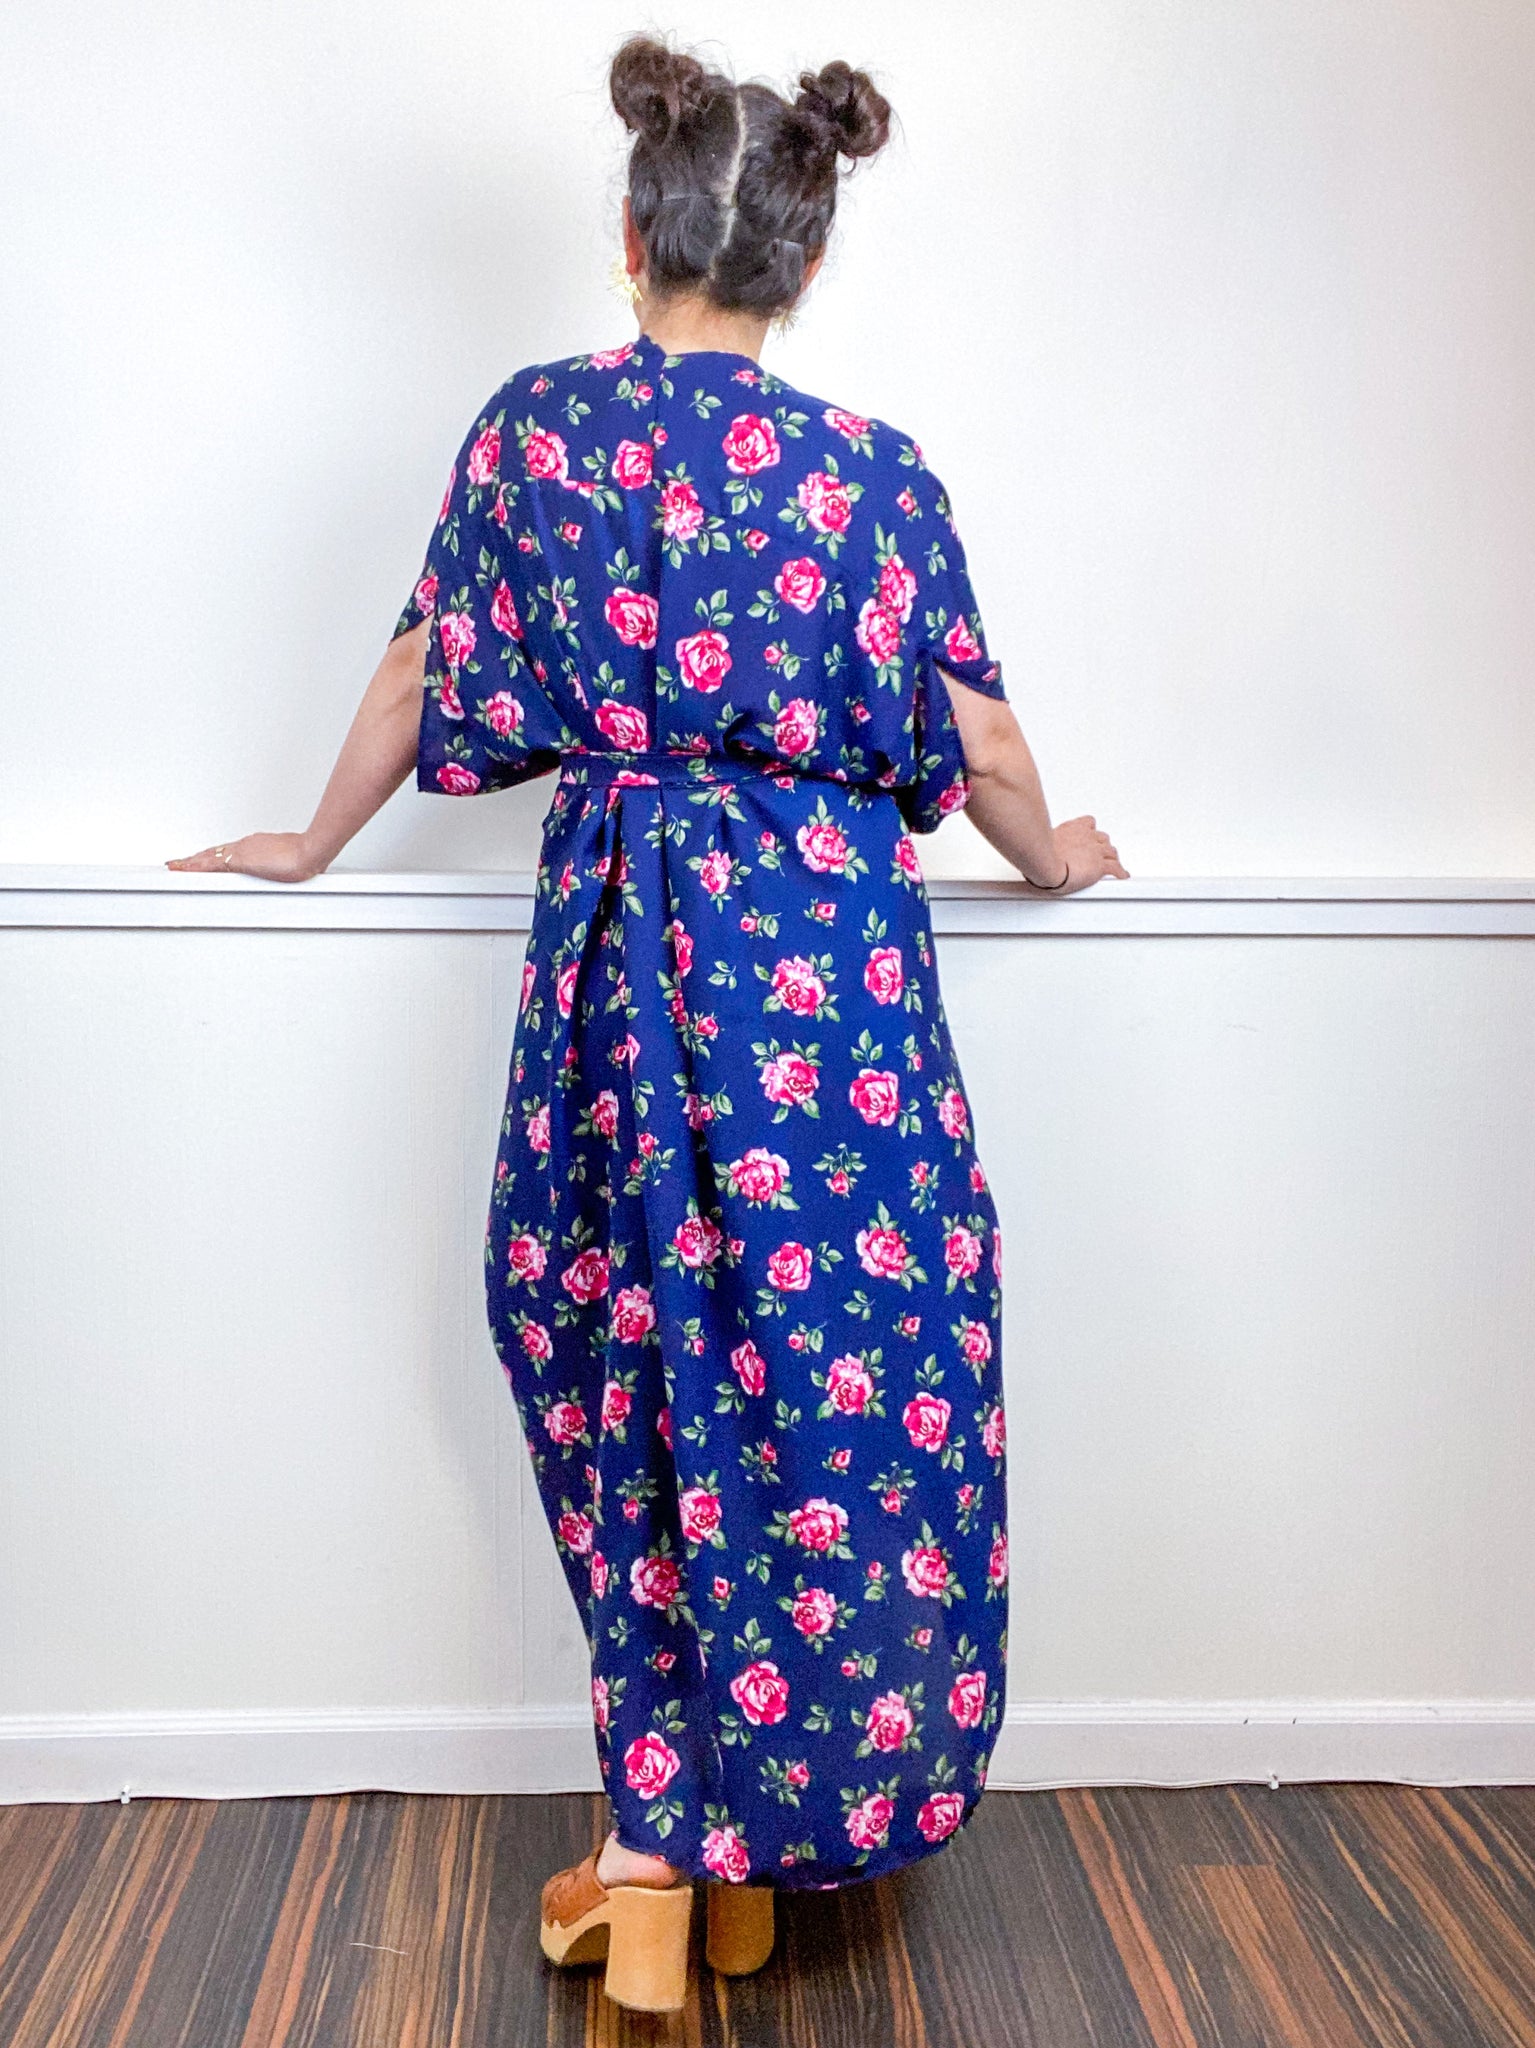 Print High Low Kimono Navy Pink Rose Satin